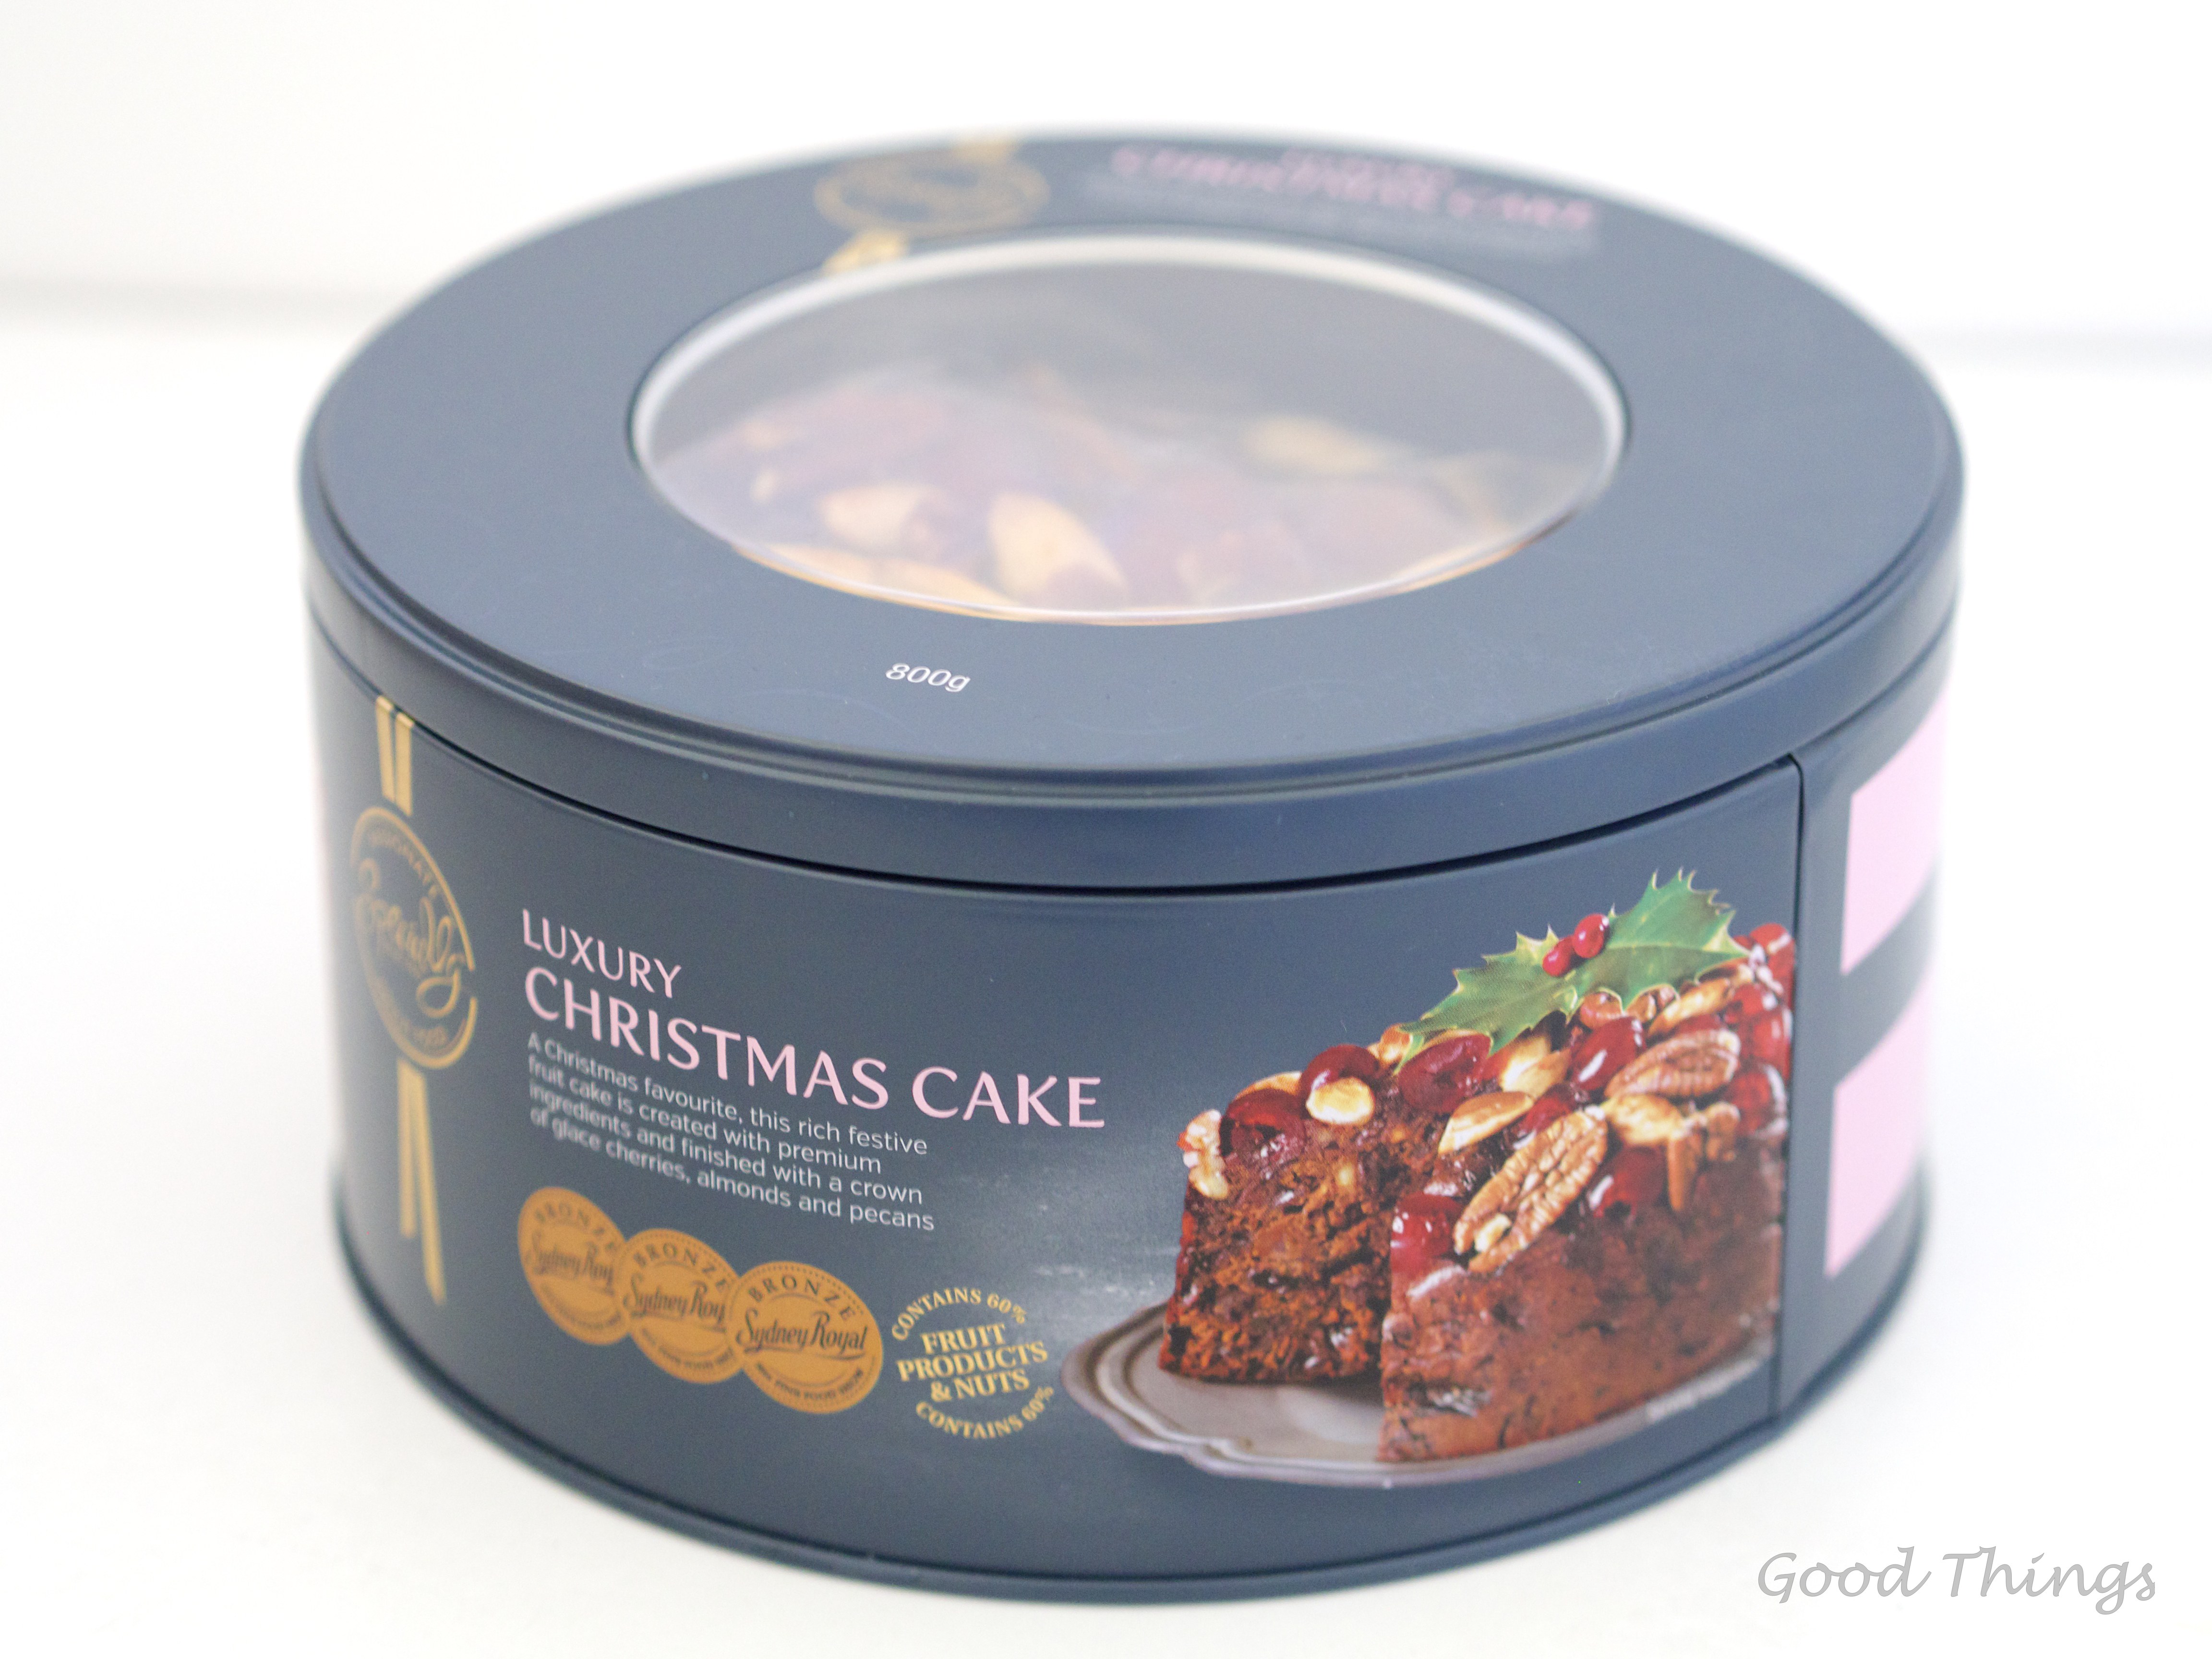 Luxury Christmas cake from Aldi  - Liz Posmyk, Good Things